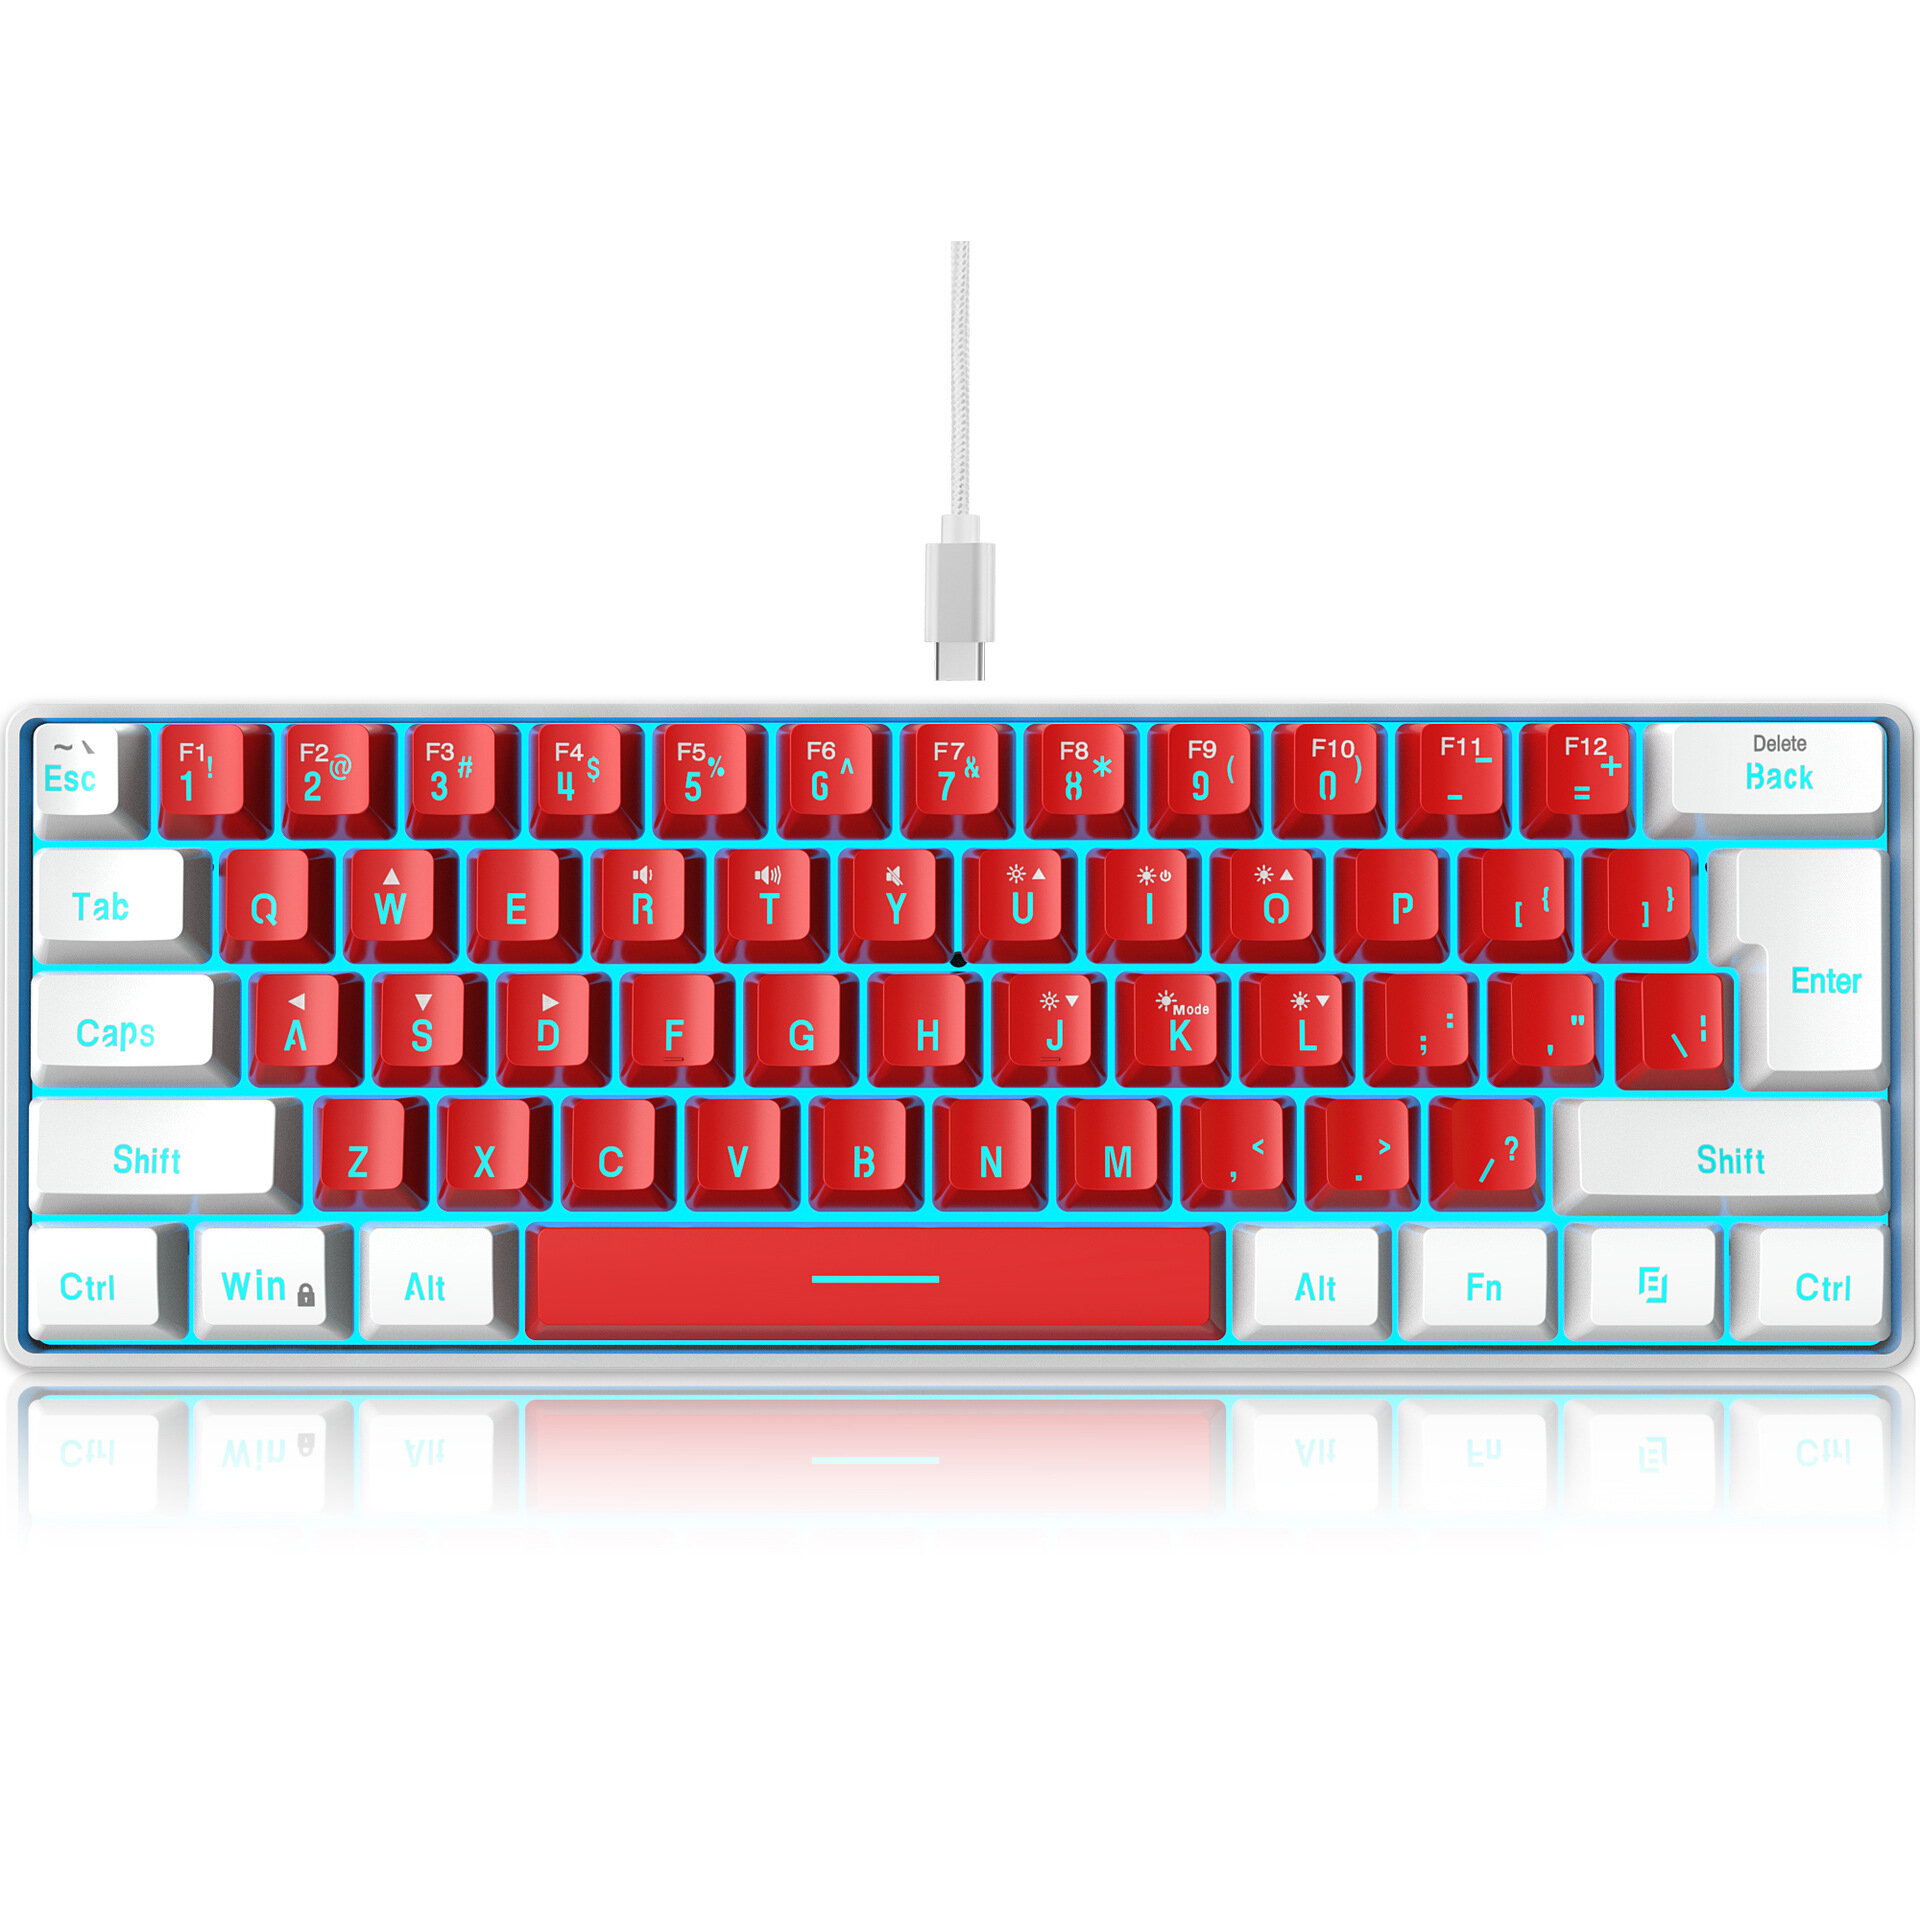 HXSJ 61-Tasten-Mini-Gaming-Tastatur, ISO-Layout, RGB-Hintergrundbeleuchtung, ABS, Material, USB-Kabel, Membrantastatur f